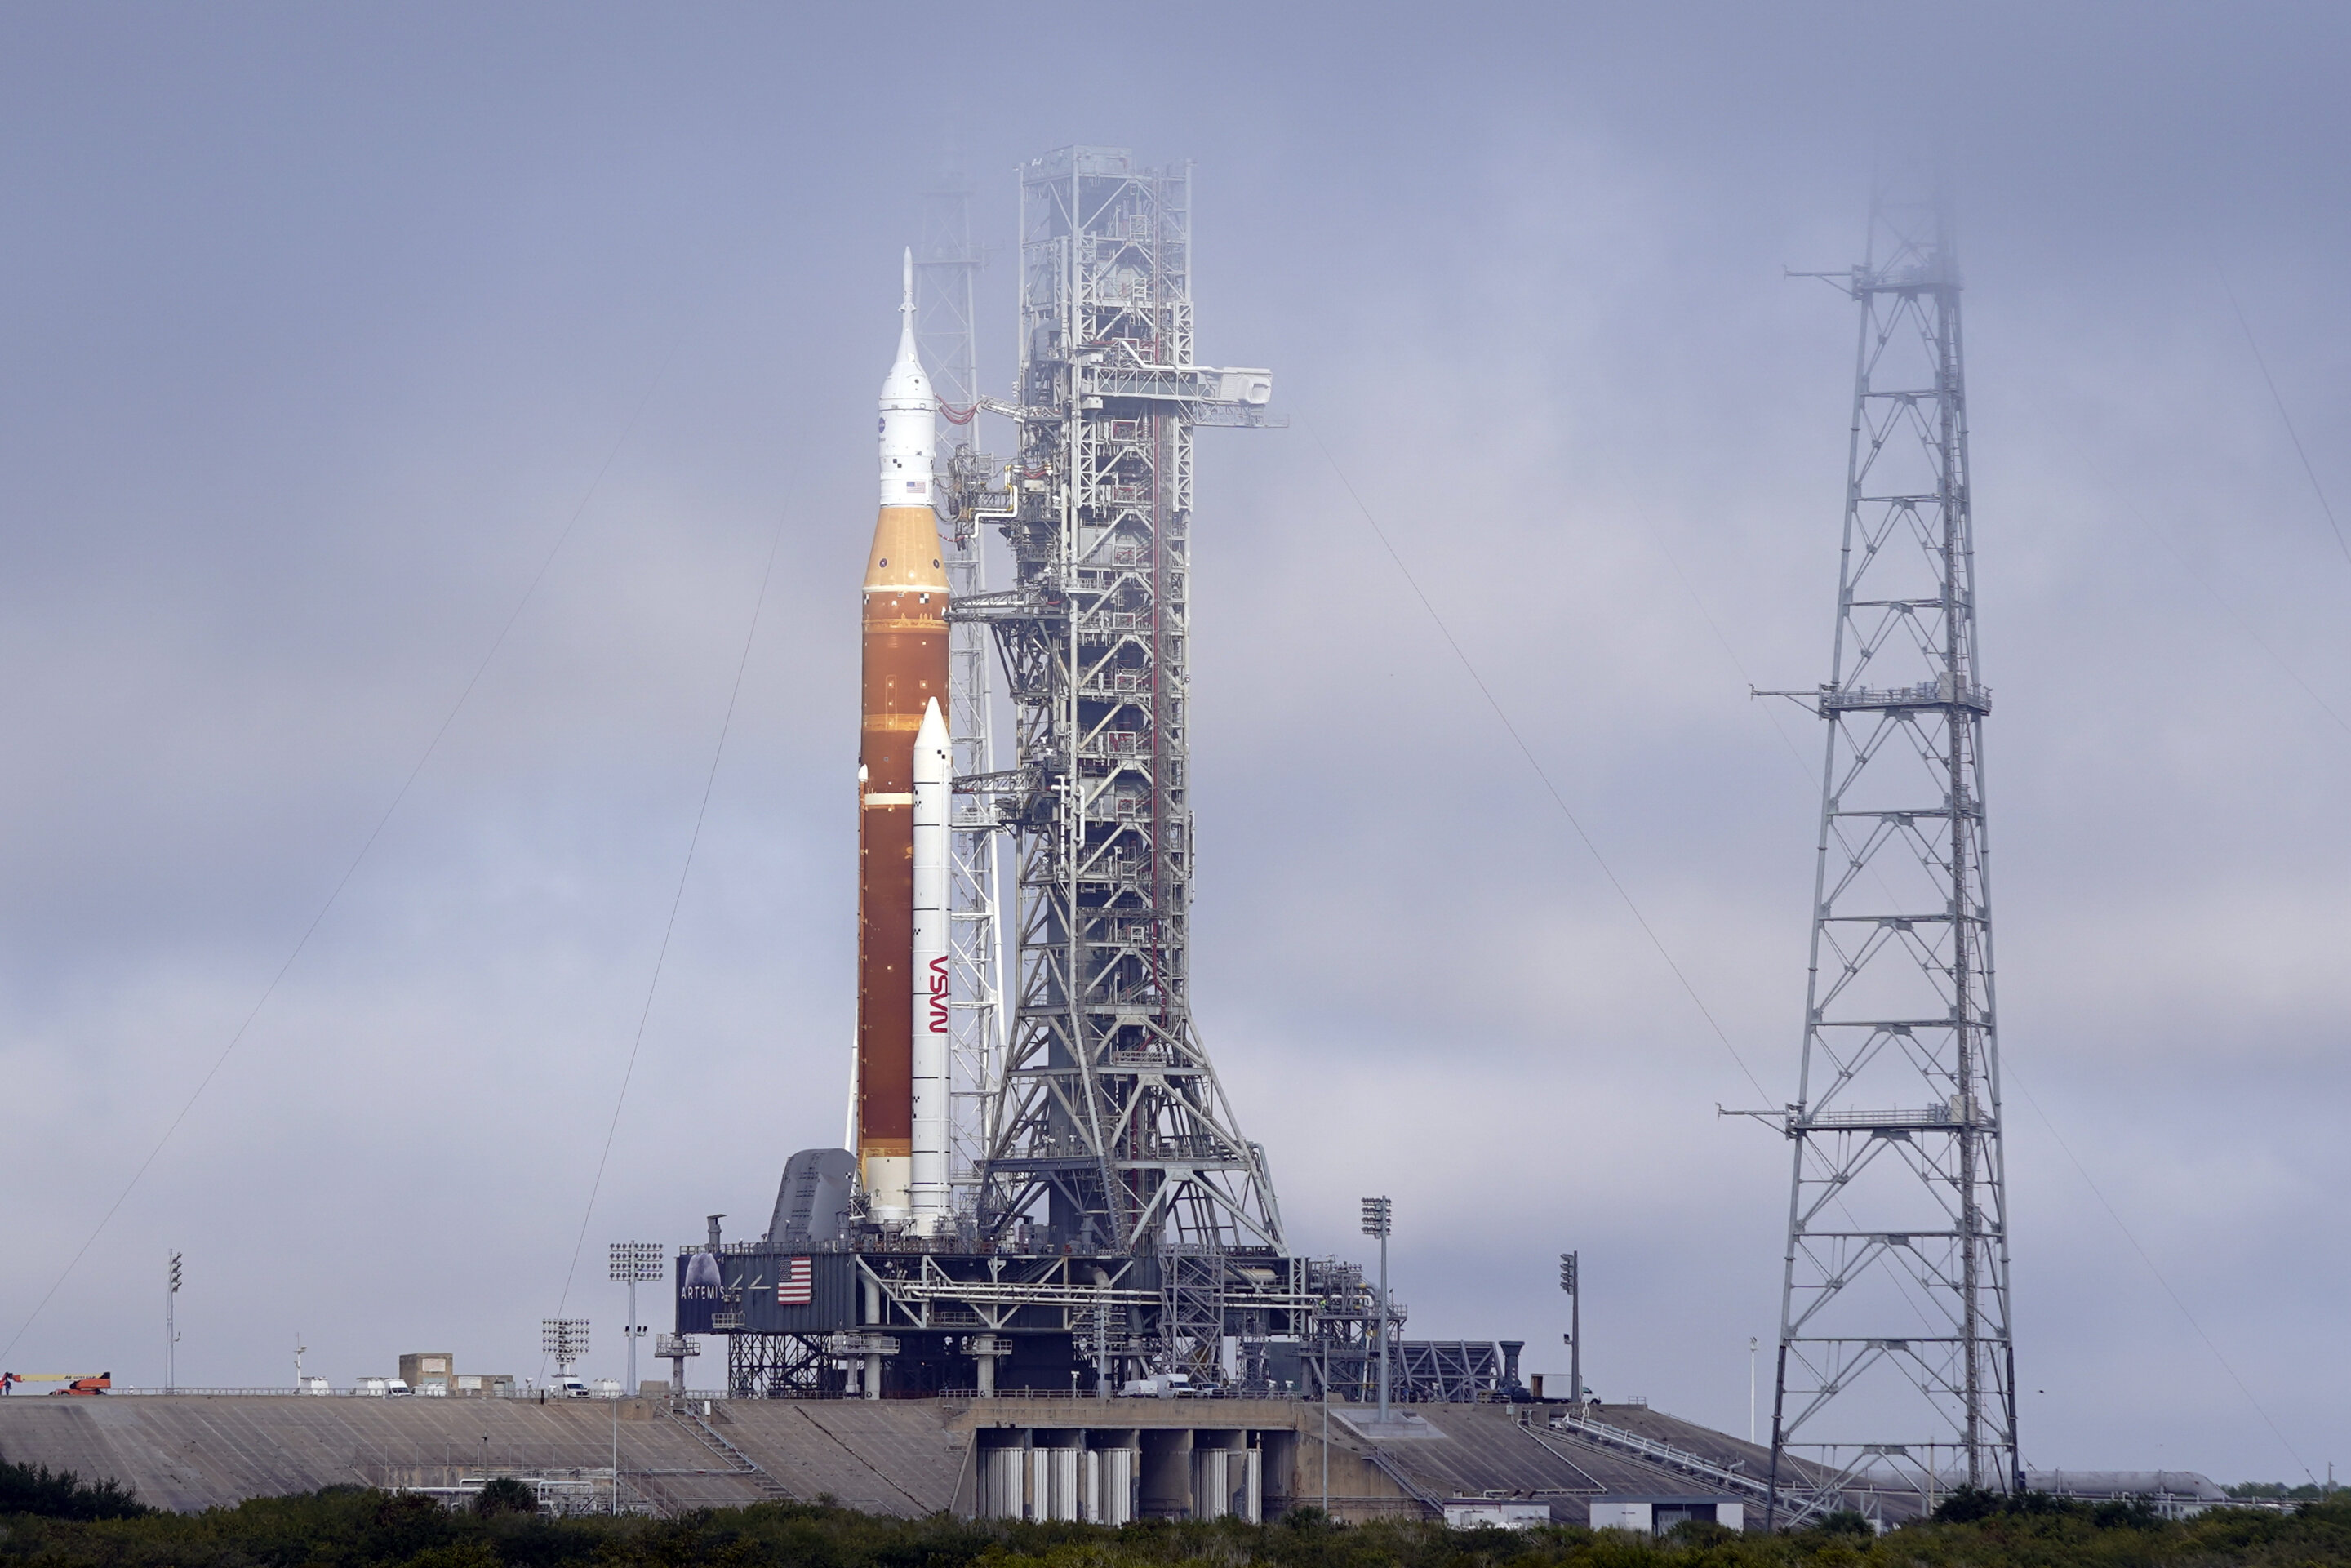 #Fuel leak thwarts NASA’s dress rehearsal for moon rocket